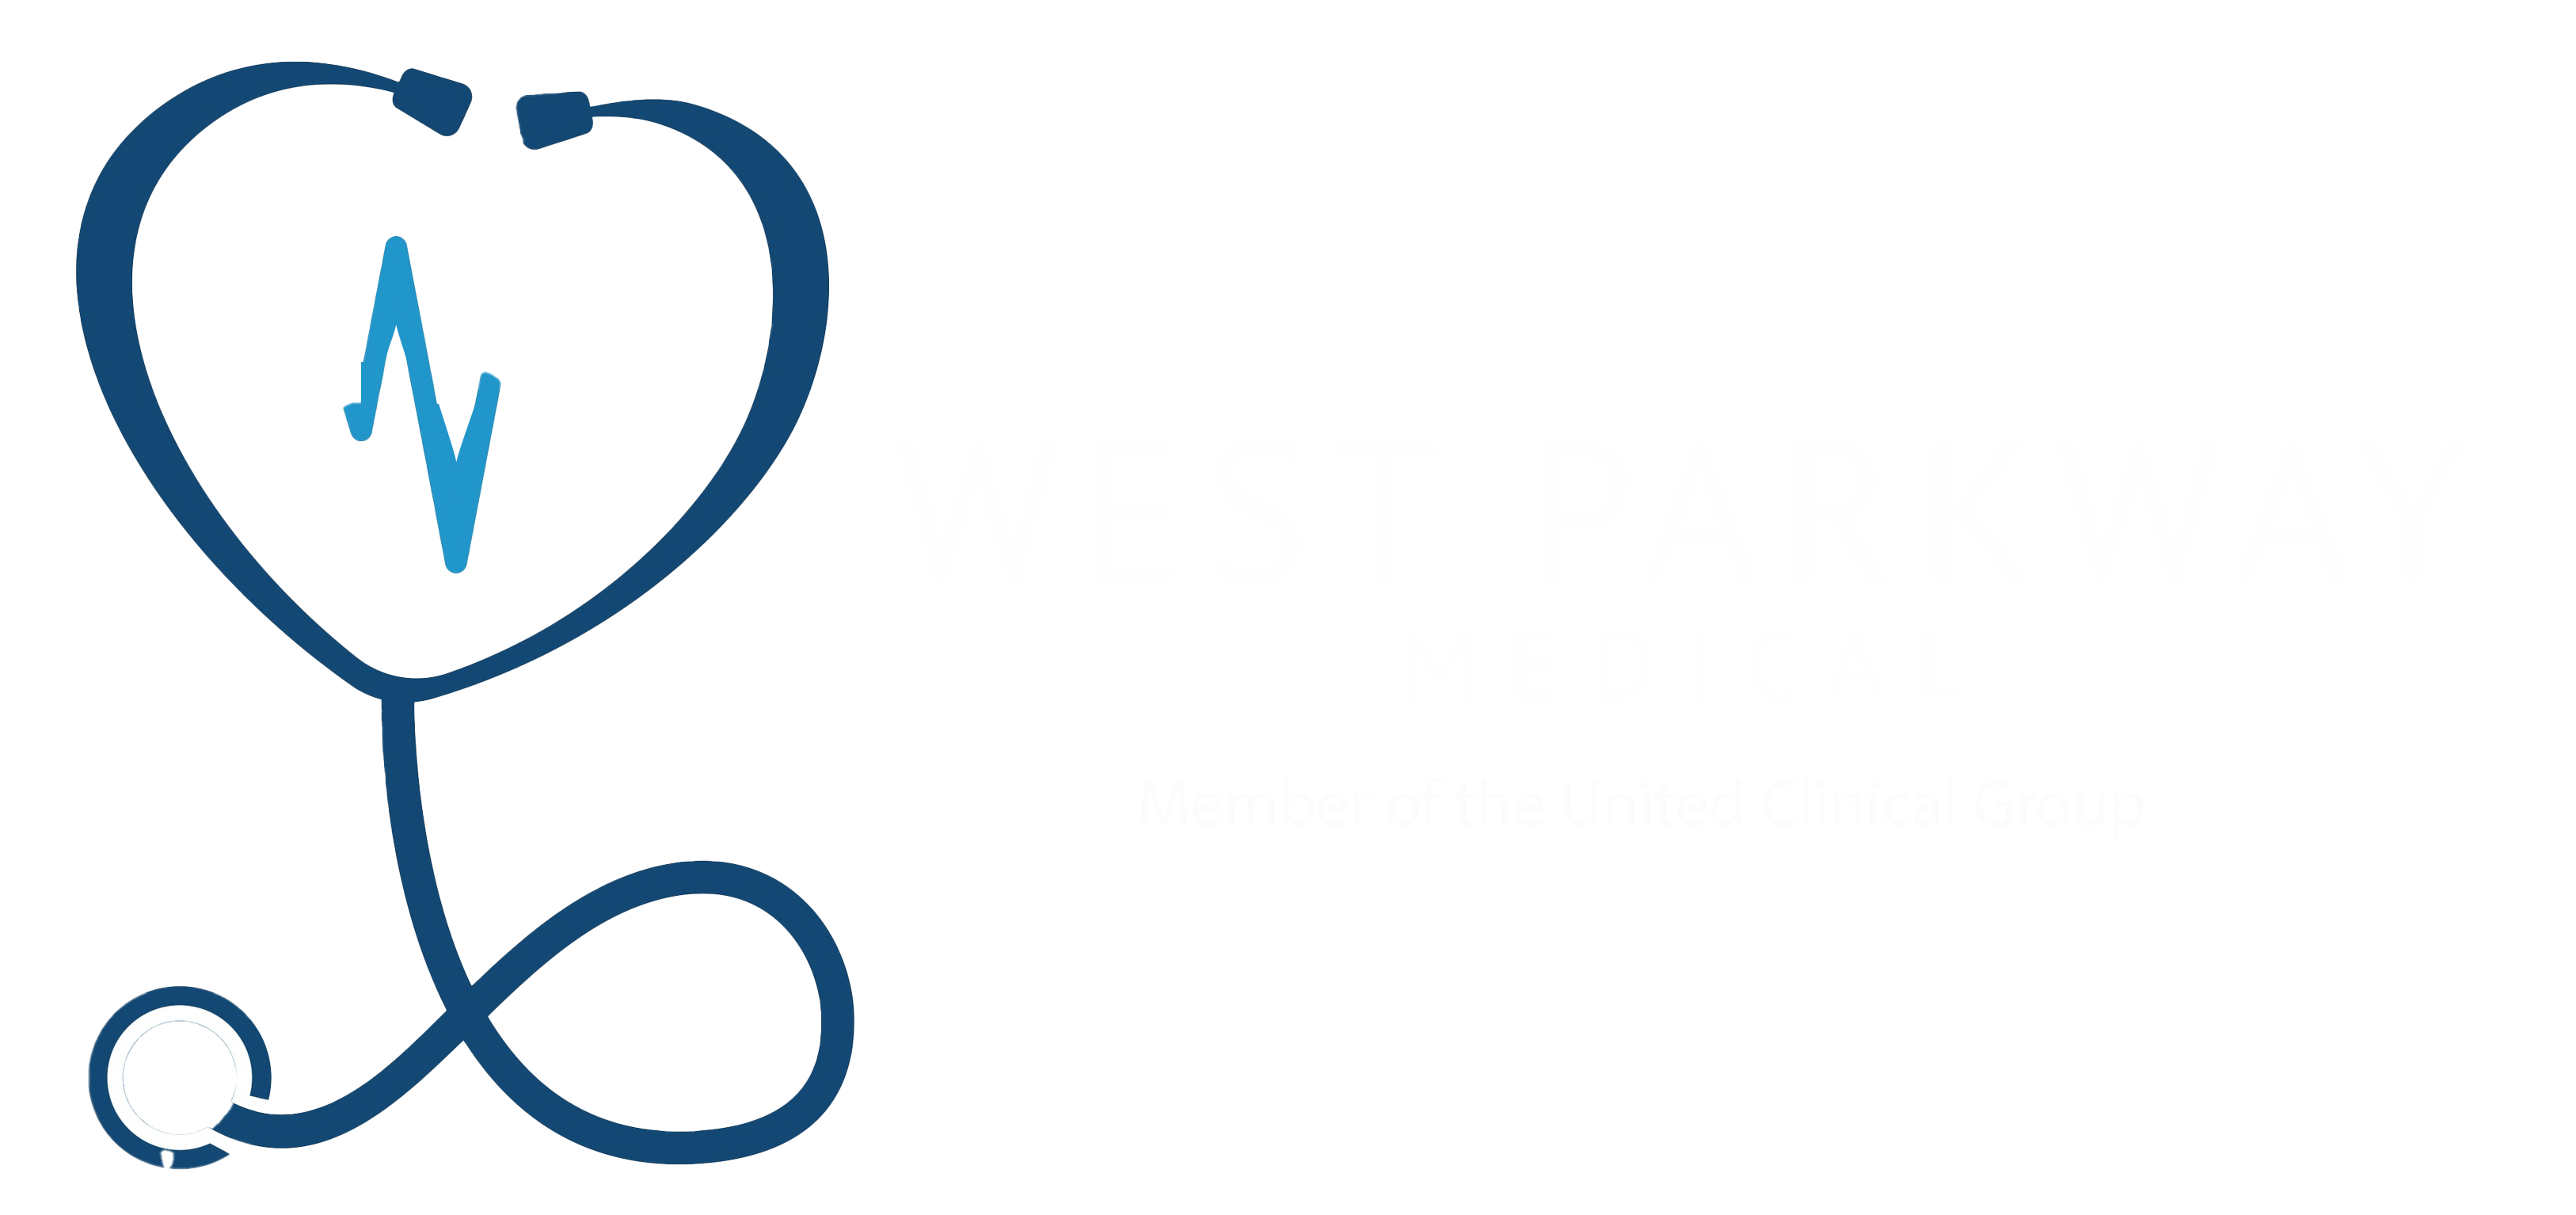 West Parkway Medical Logo